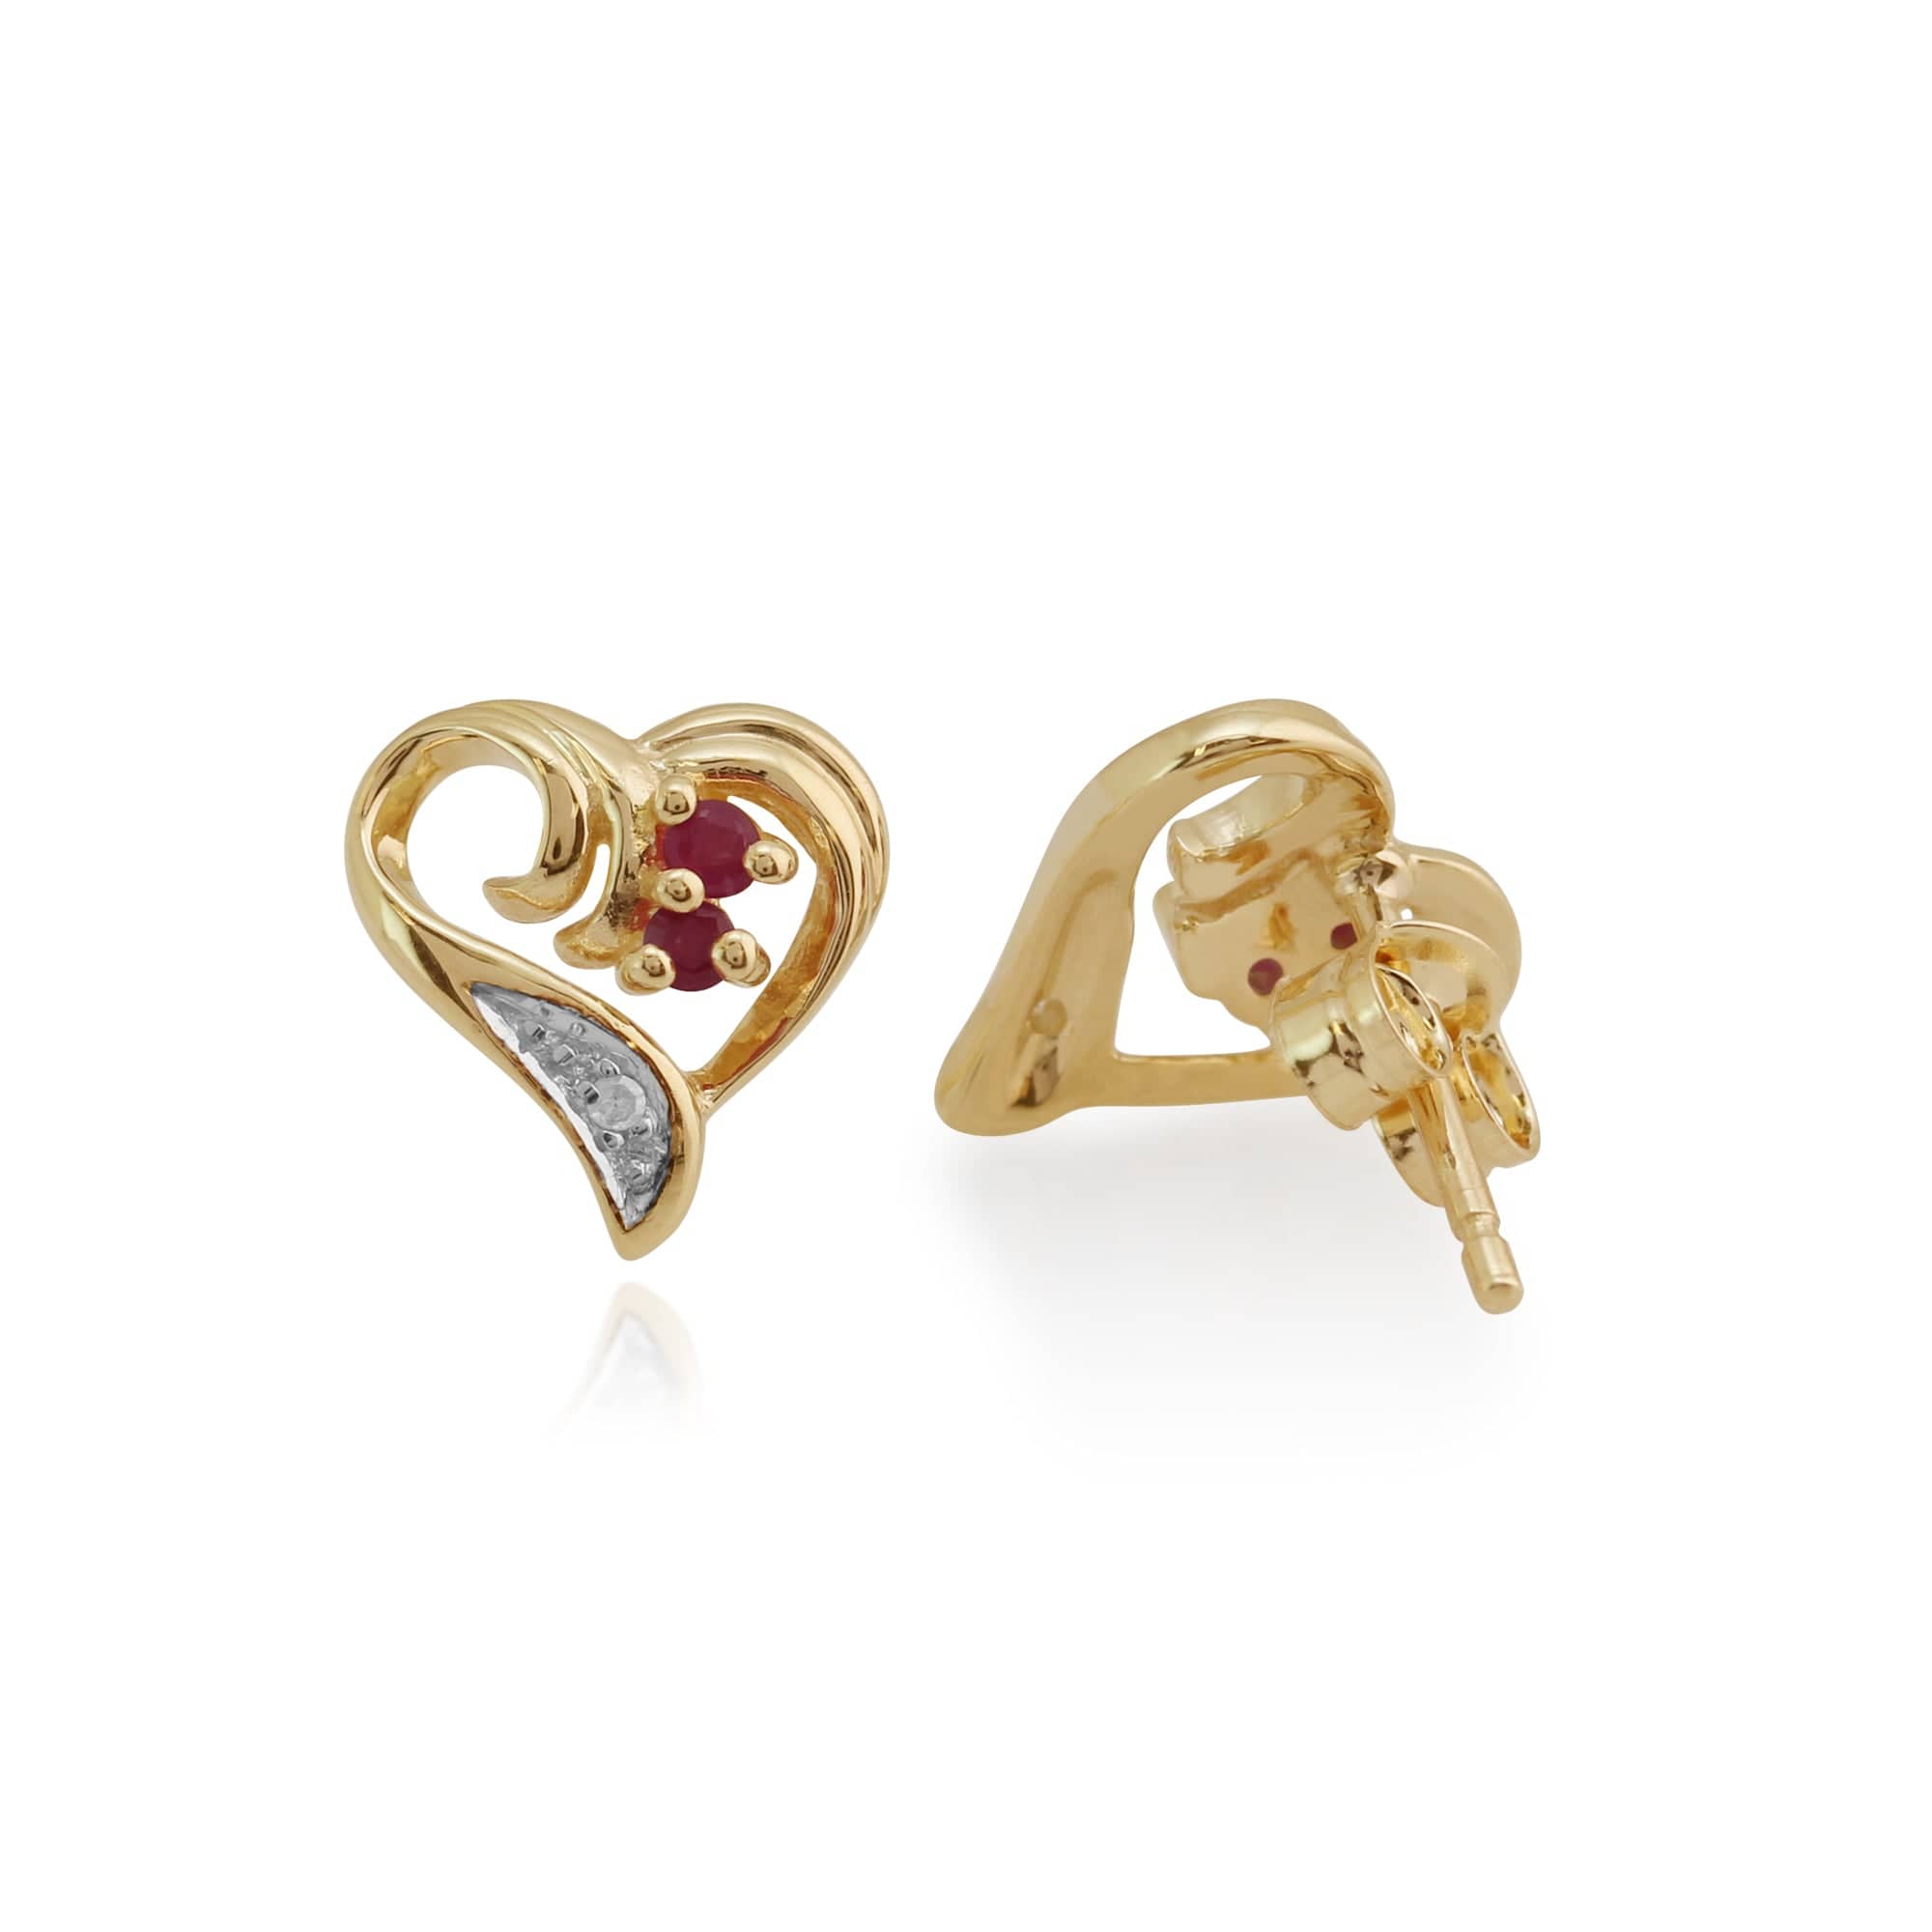 Classic Ruby & Diamond Swirled Love Heart Stud Earrings in 9ct Gold - Gemondo